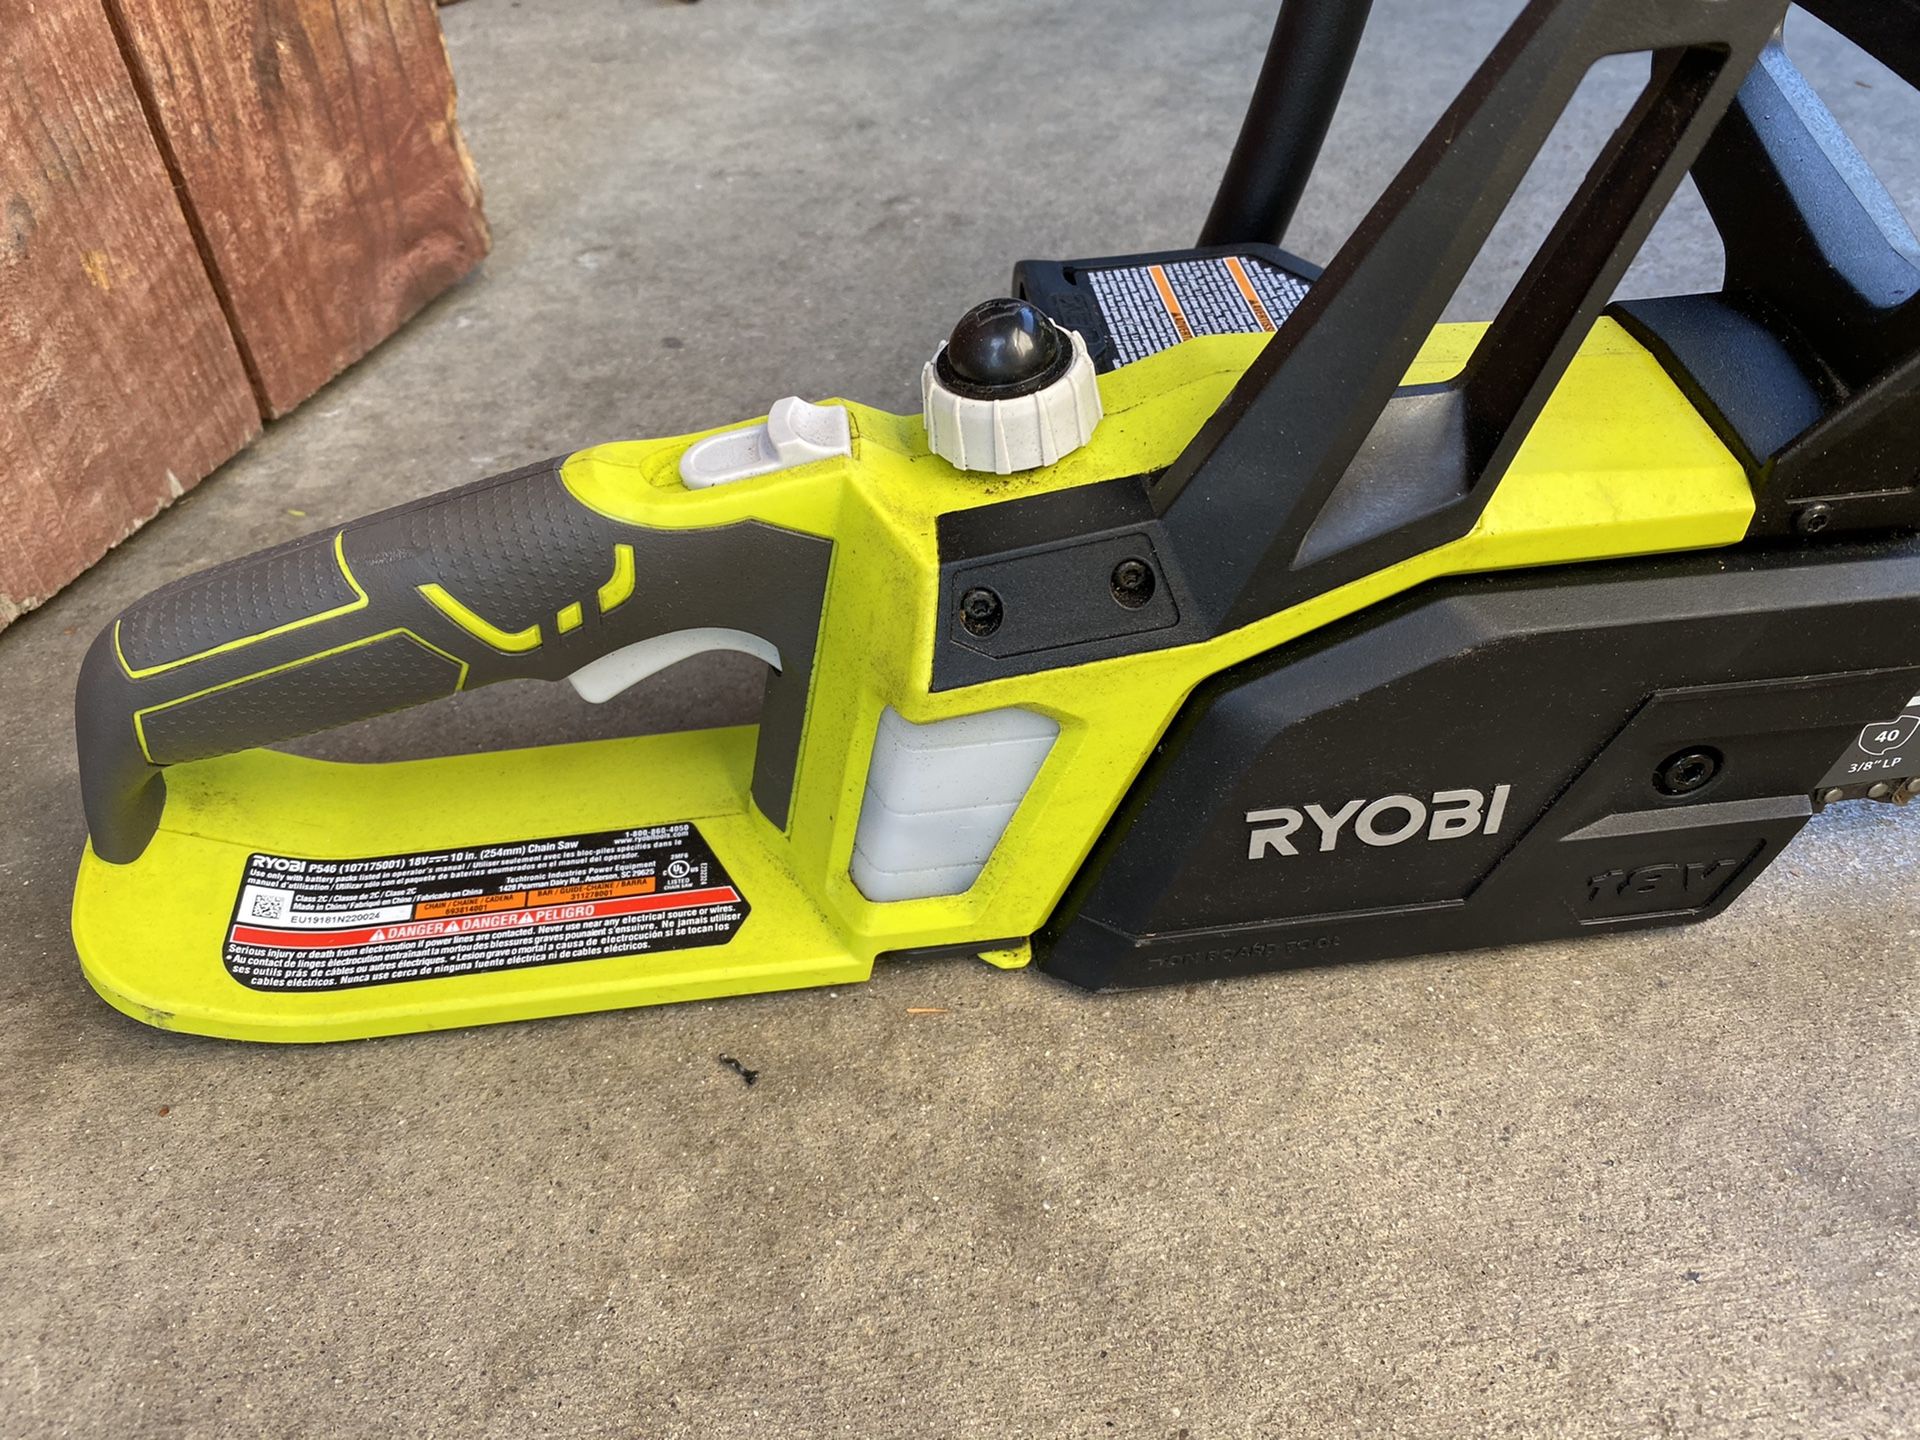 Ryobi 18 V chainsaw and drill